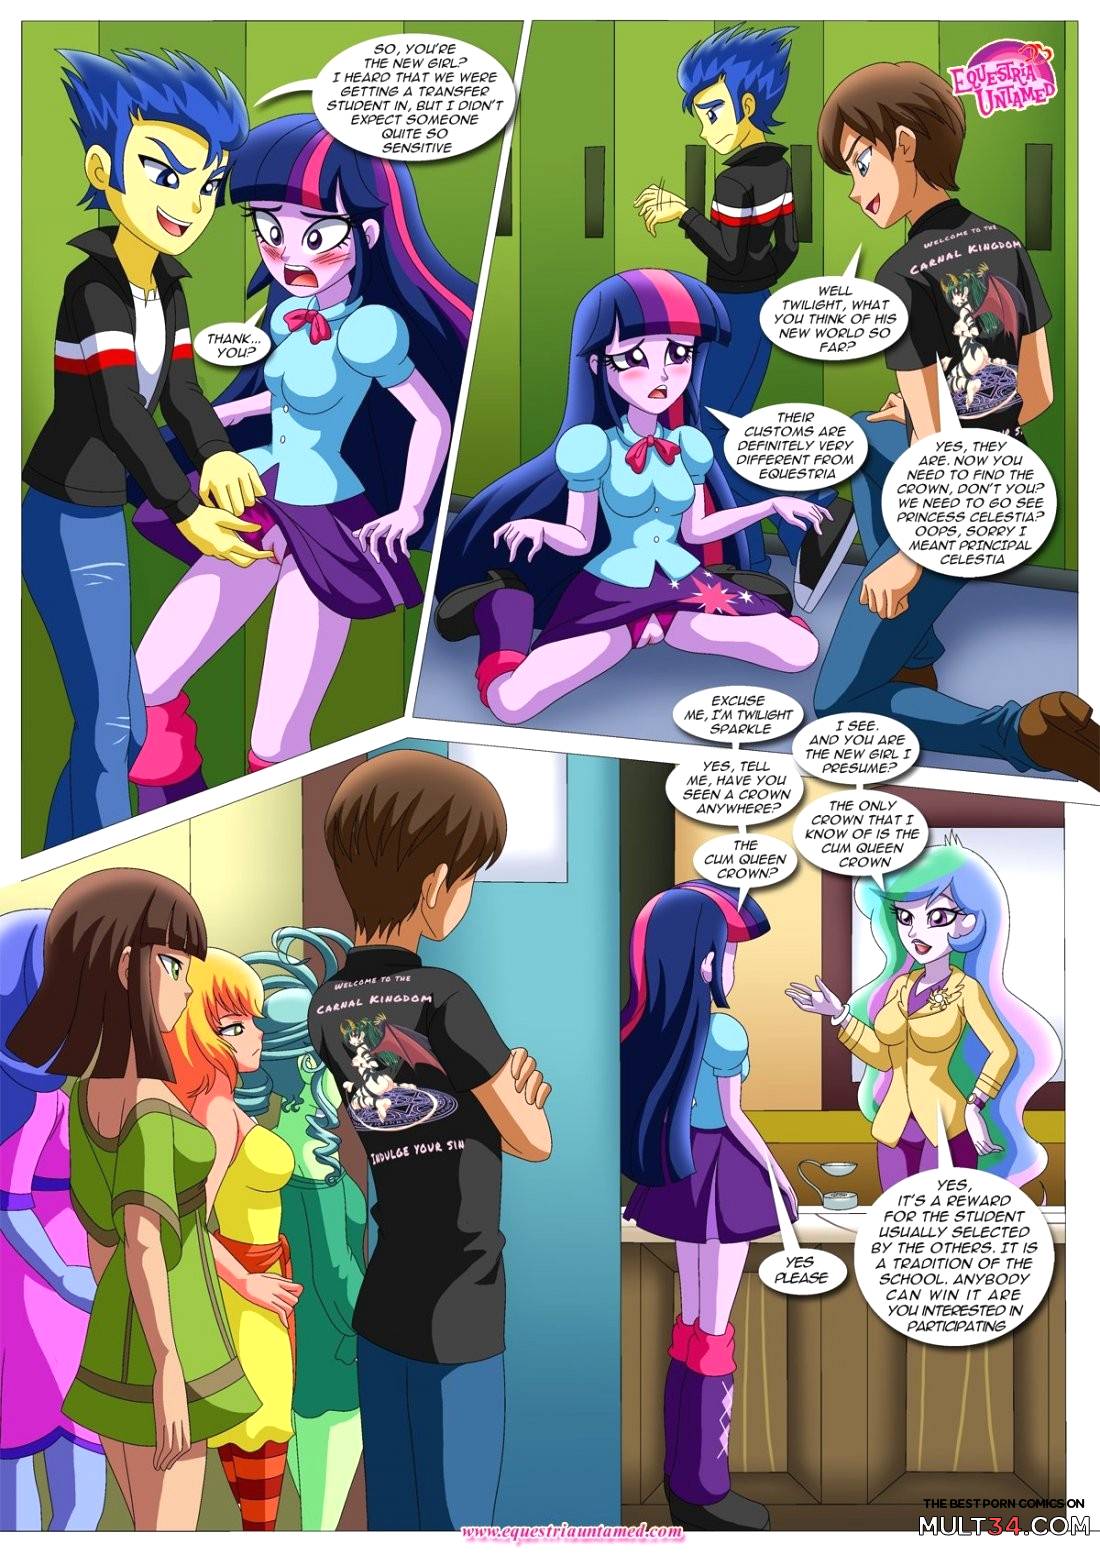 Equestria girls unleashed porn comic - the best cartoon porn comics, Rule 34  | MULT34